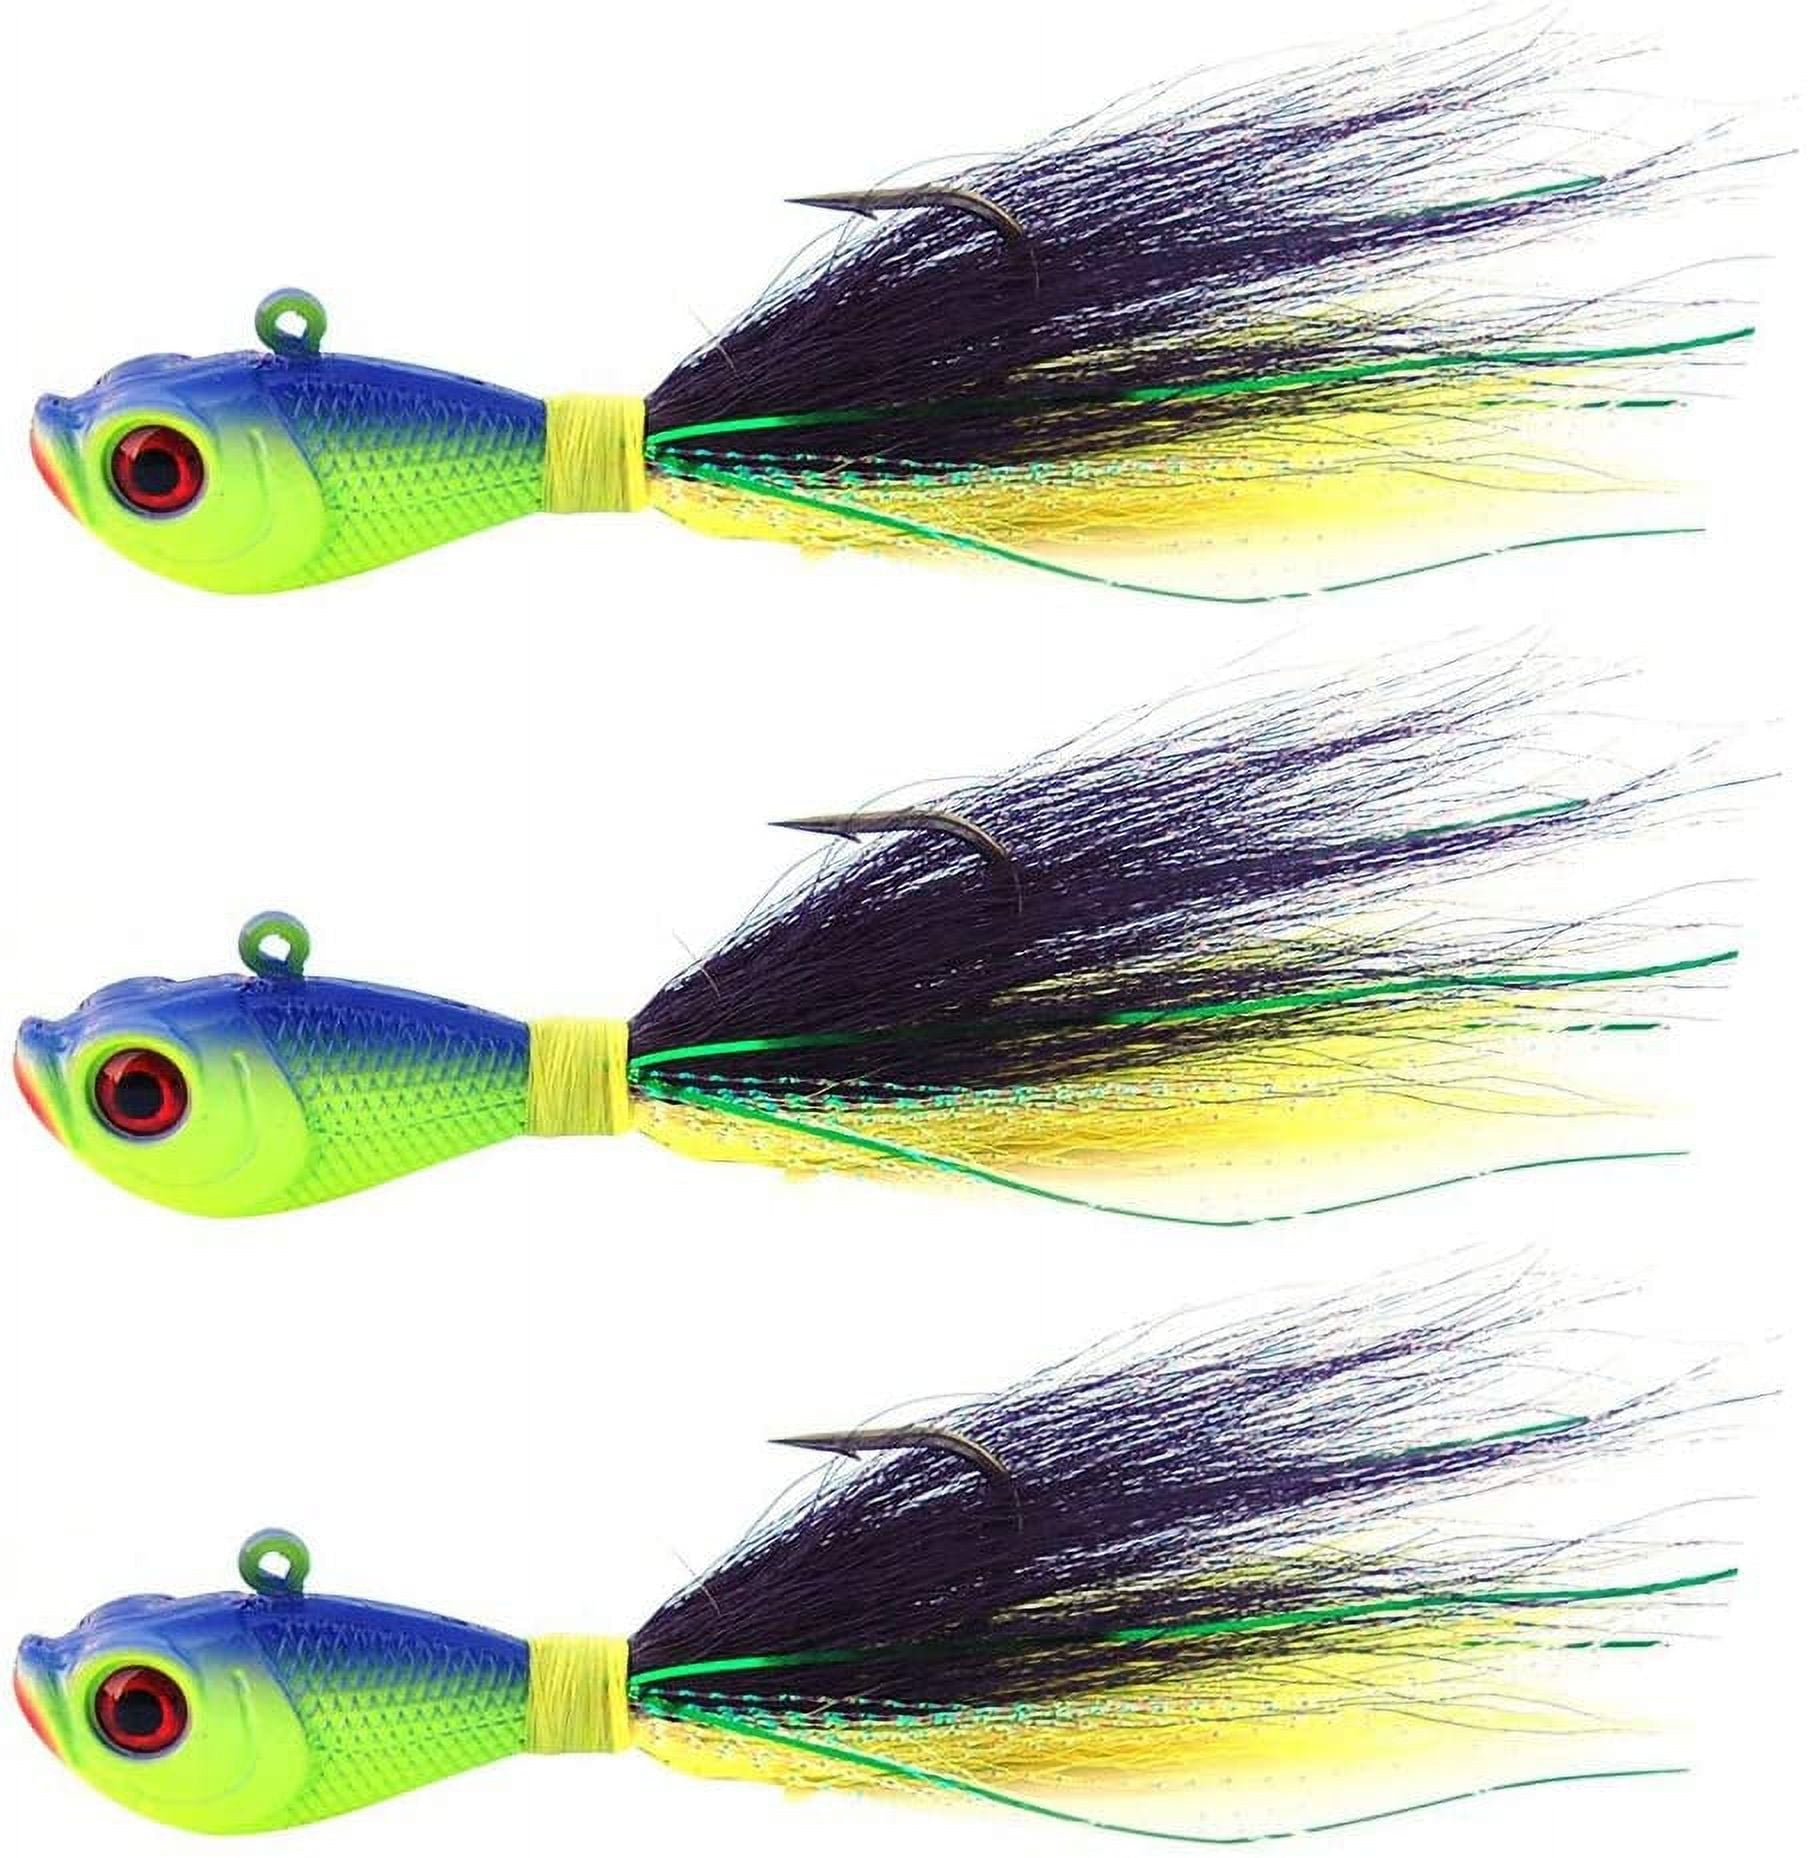 OROOTL Bucktail Jigs Saltwater Hair Jigs Kit, 5pcs Fishing Jigs Saltwater  Bucktail Hair Jig for Striped Bass Walleye Snook Rockfish Saltwater